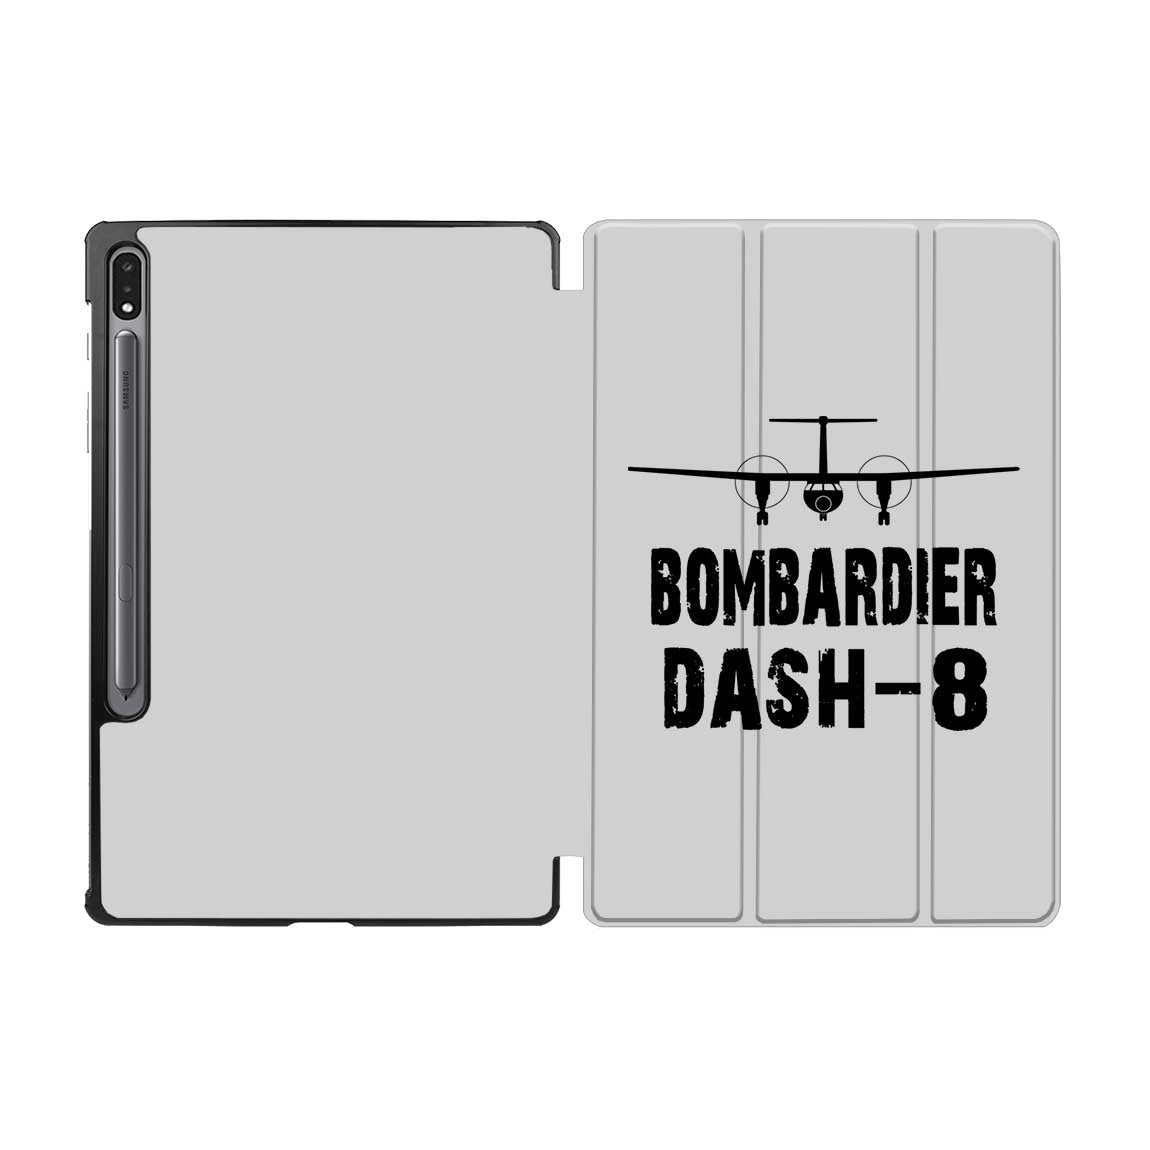 Bombardier Dash-8 & Plane Designed Samsung Tablet Cases